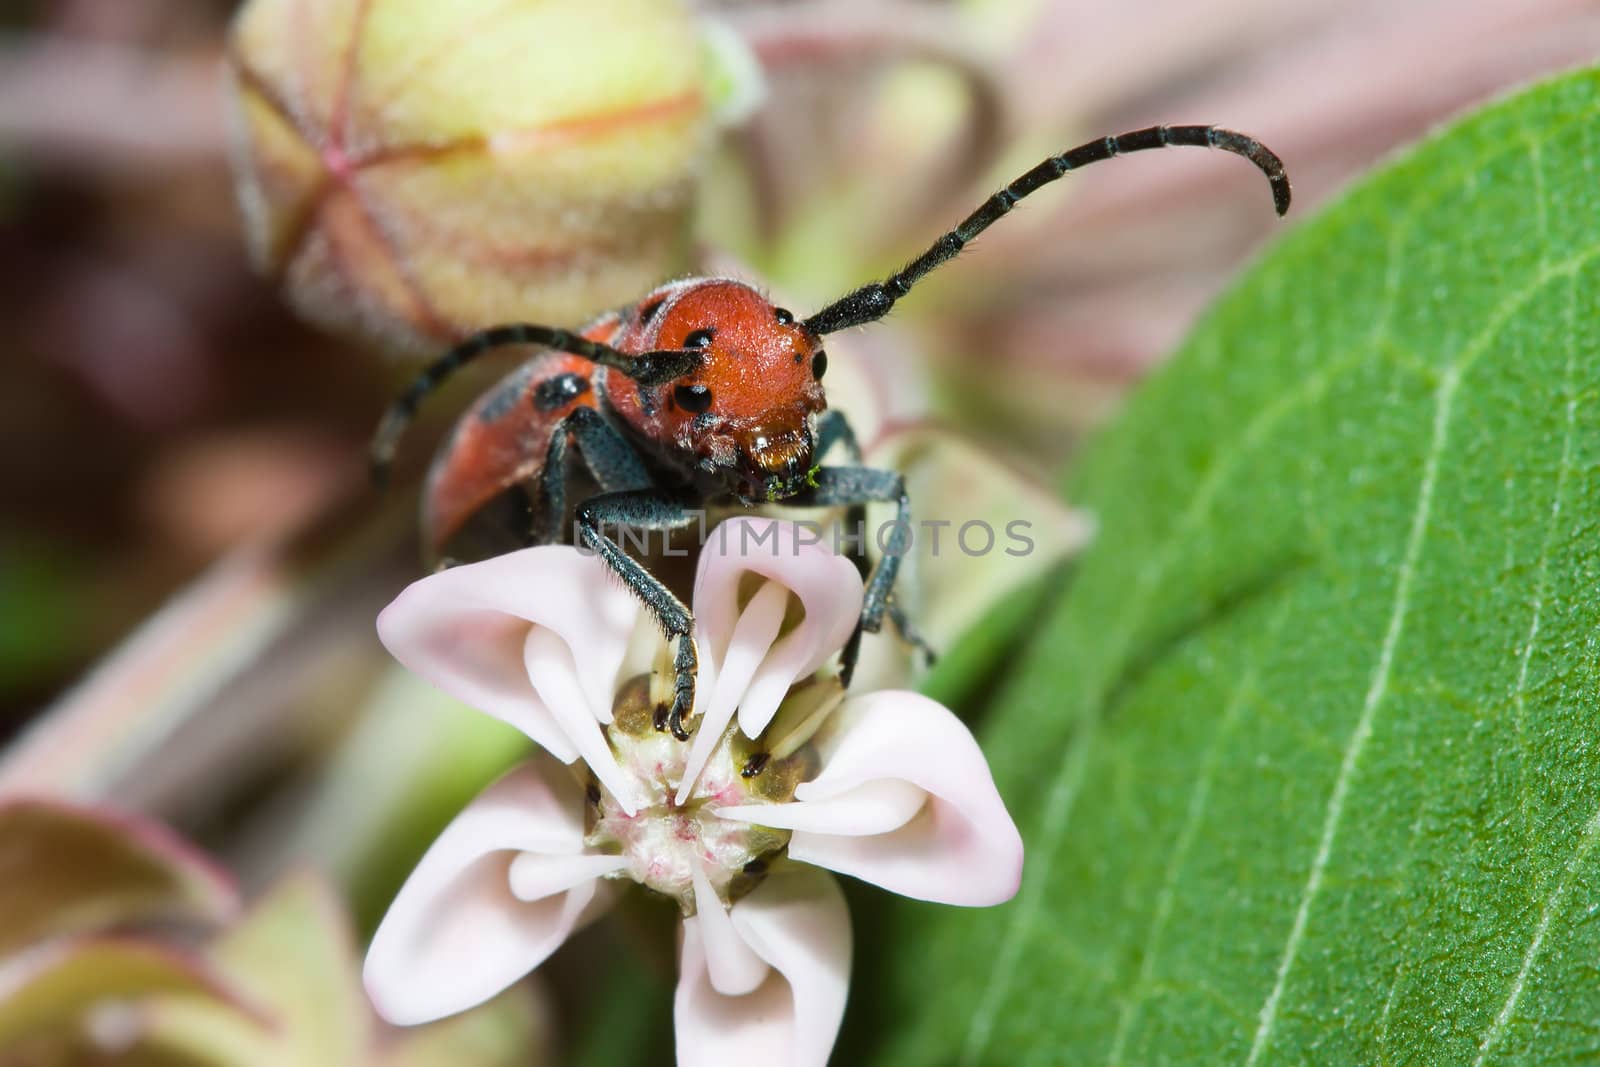 The Red Milkweed Beetle by Coffee999